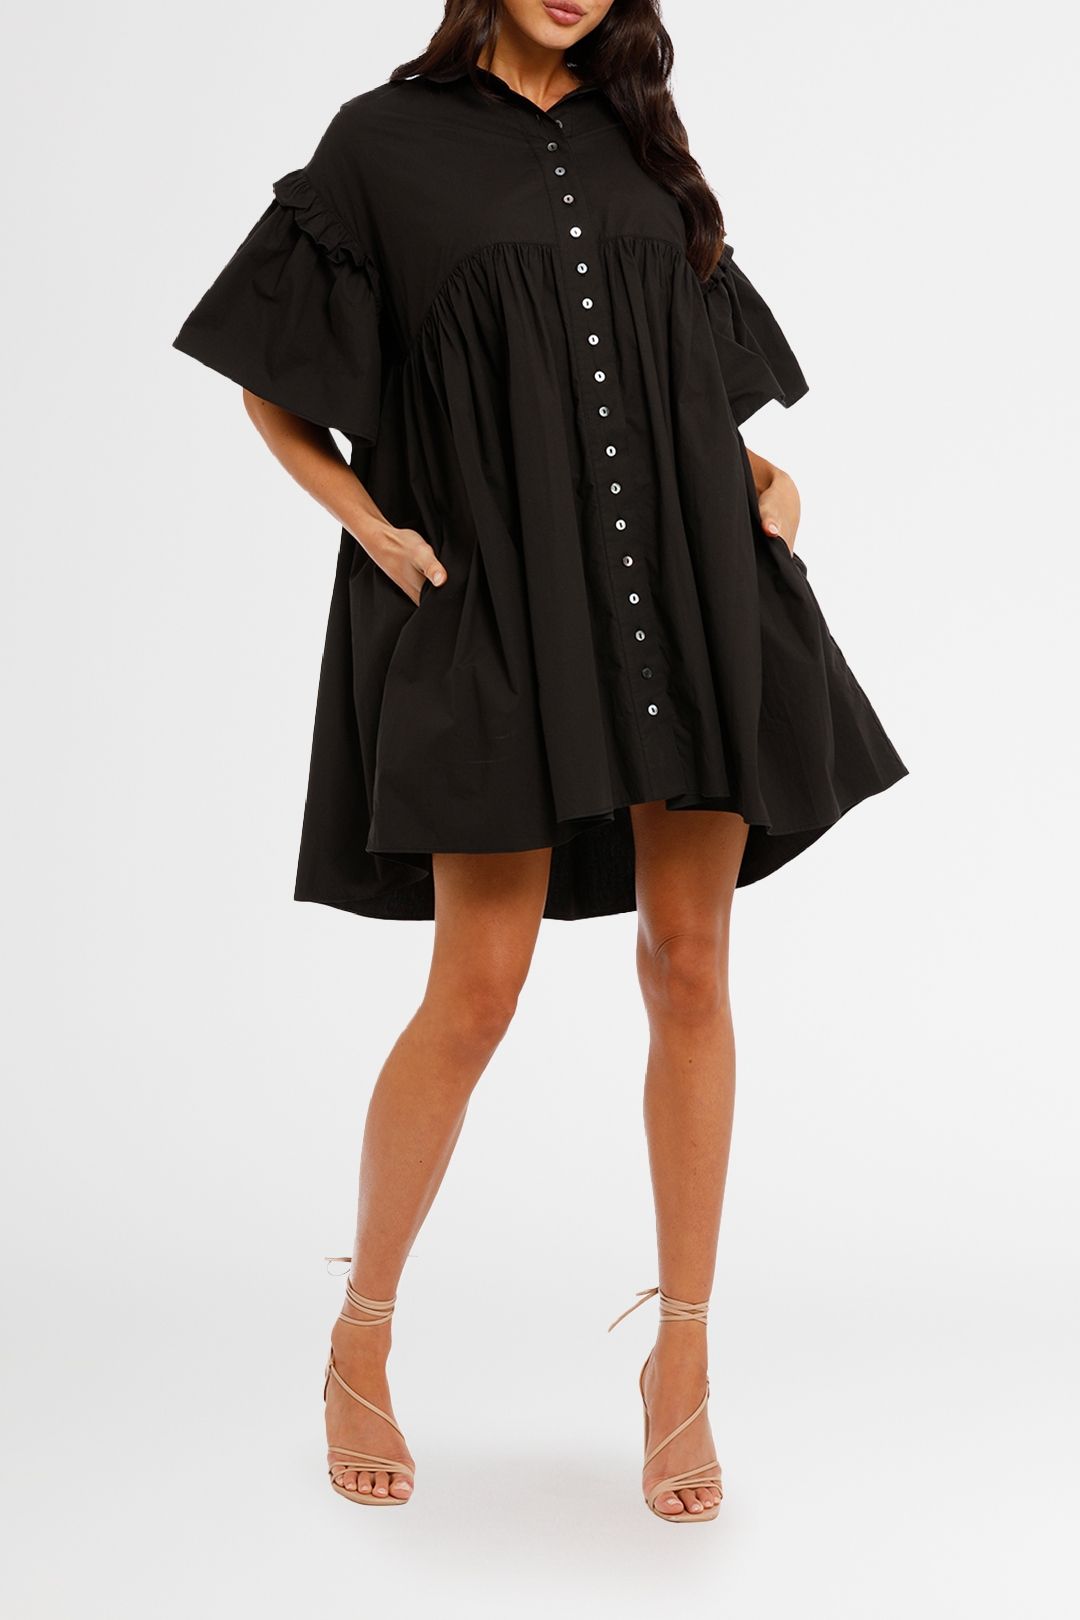 Joslin Ashleigh Smock Mini Dress Black Short Sleeve